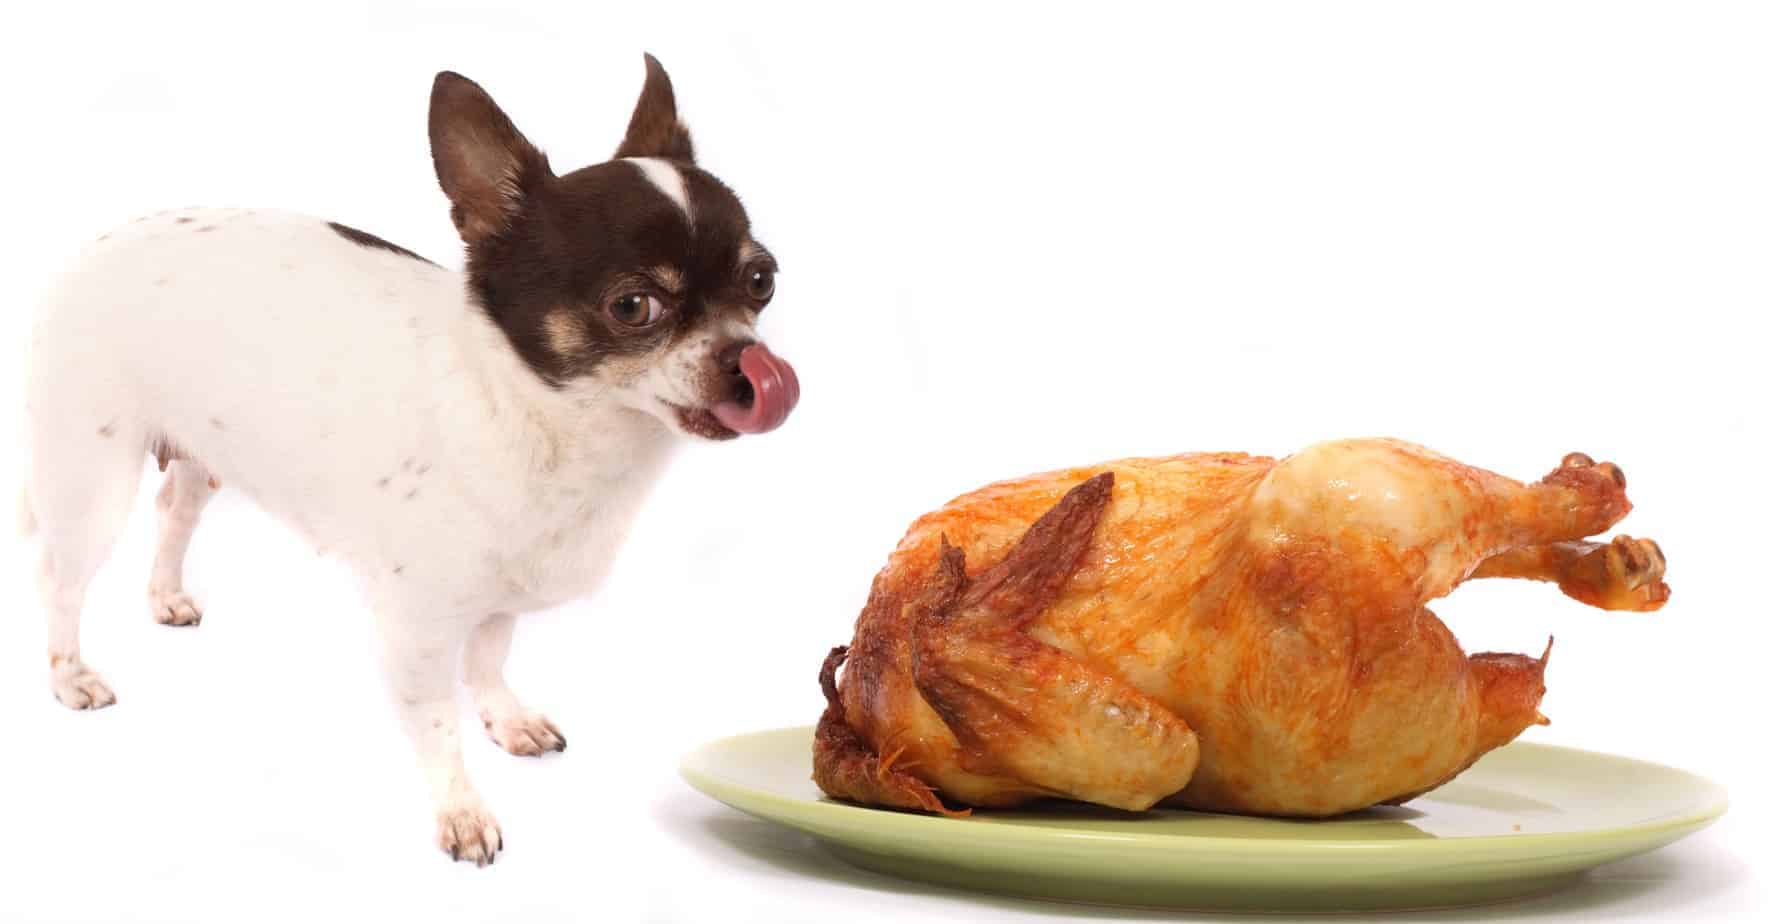 Turn holiday leftovers into pet food - DogsBestLife.com